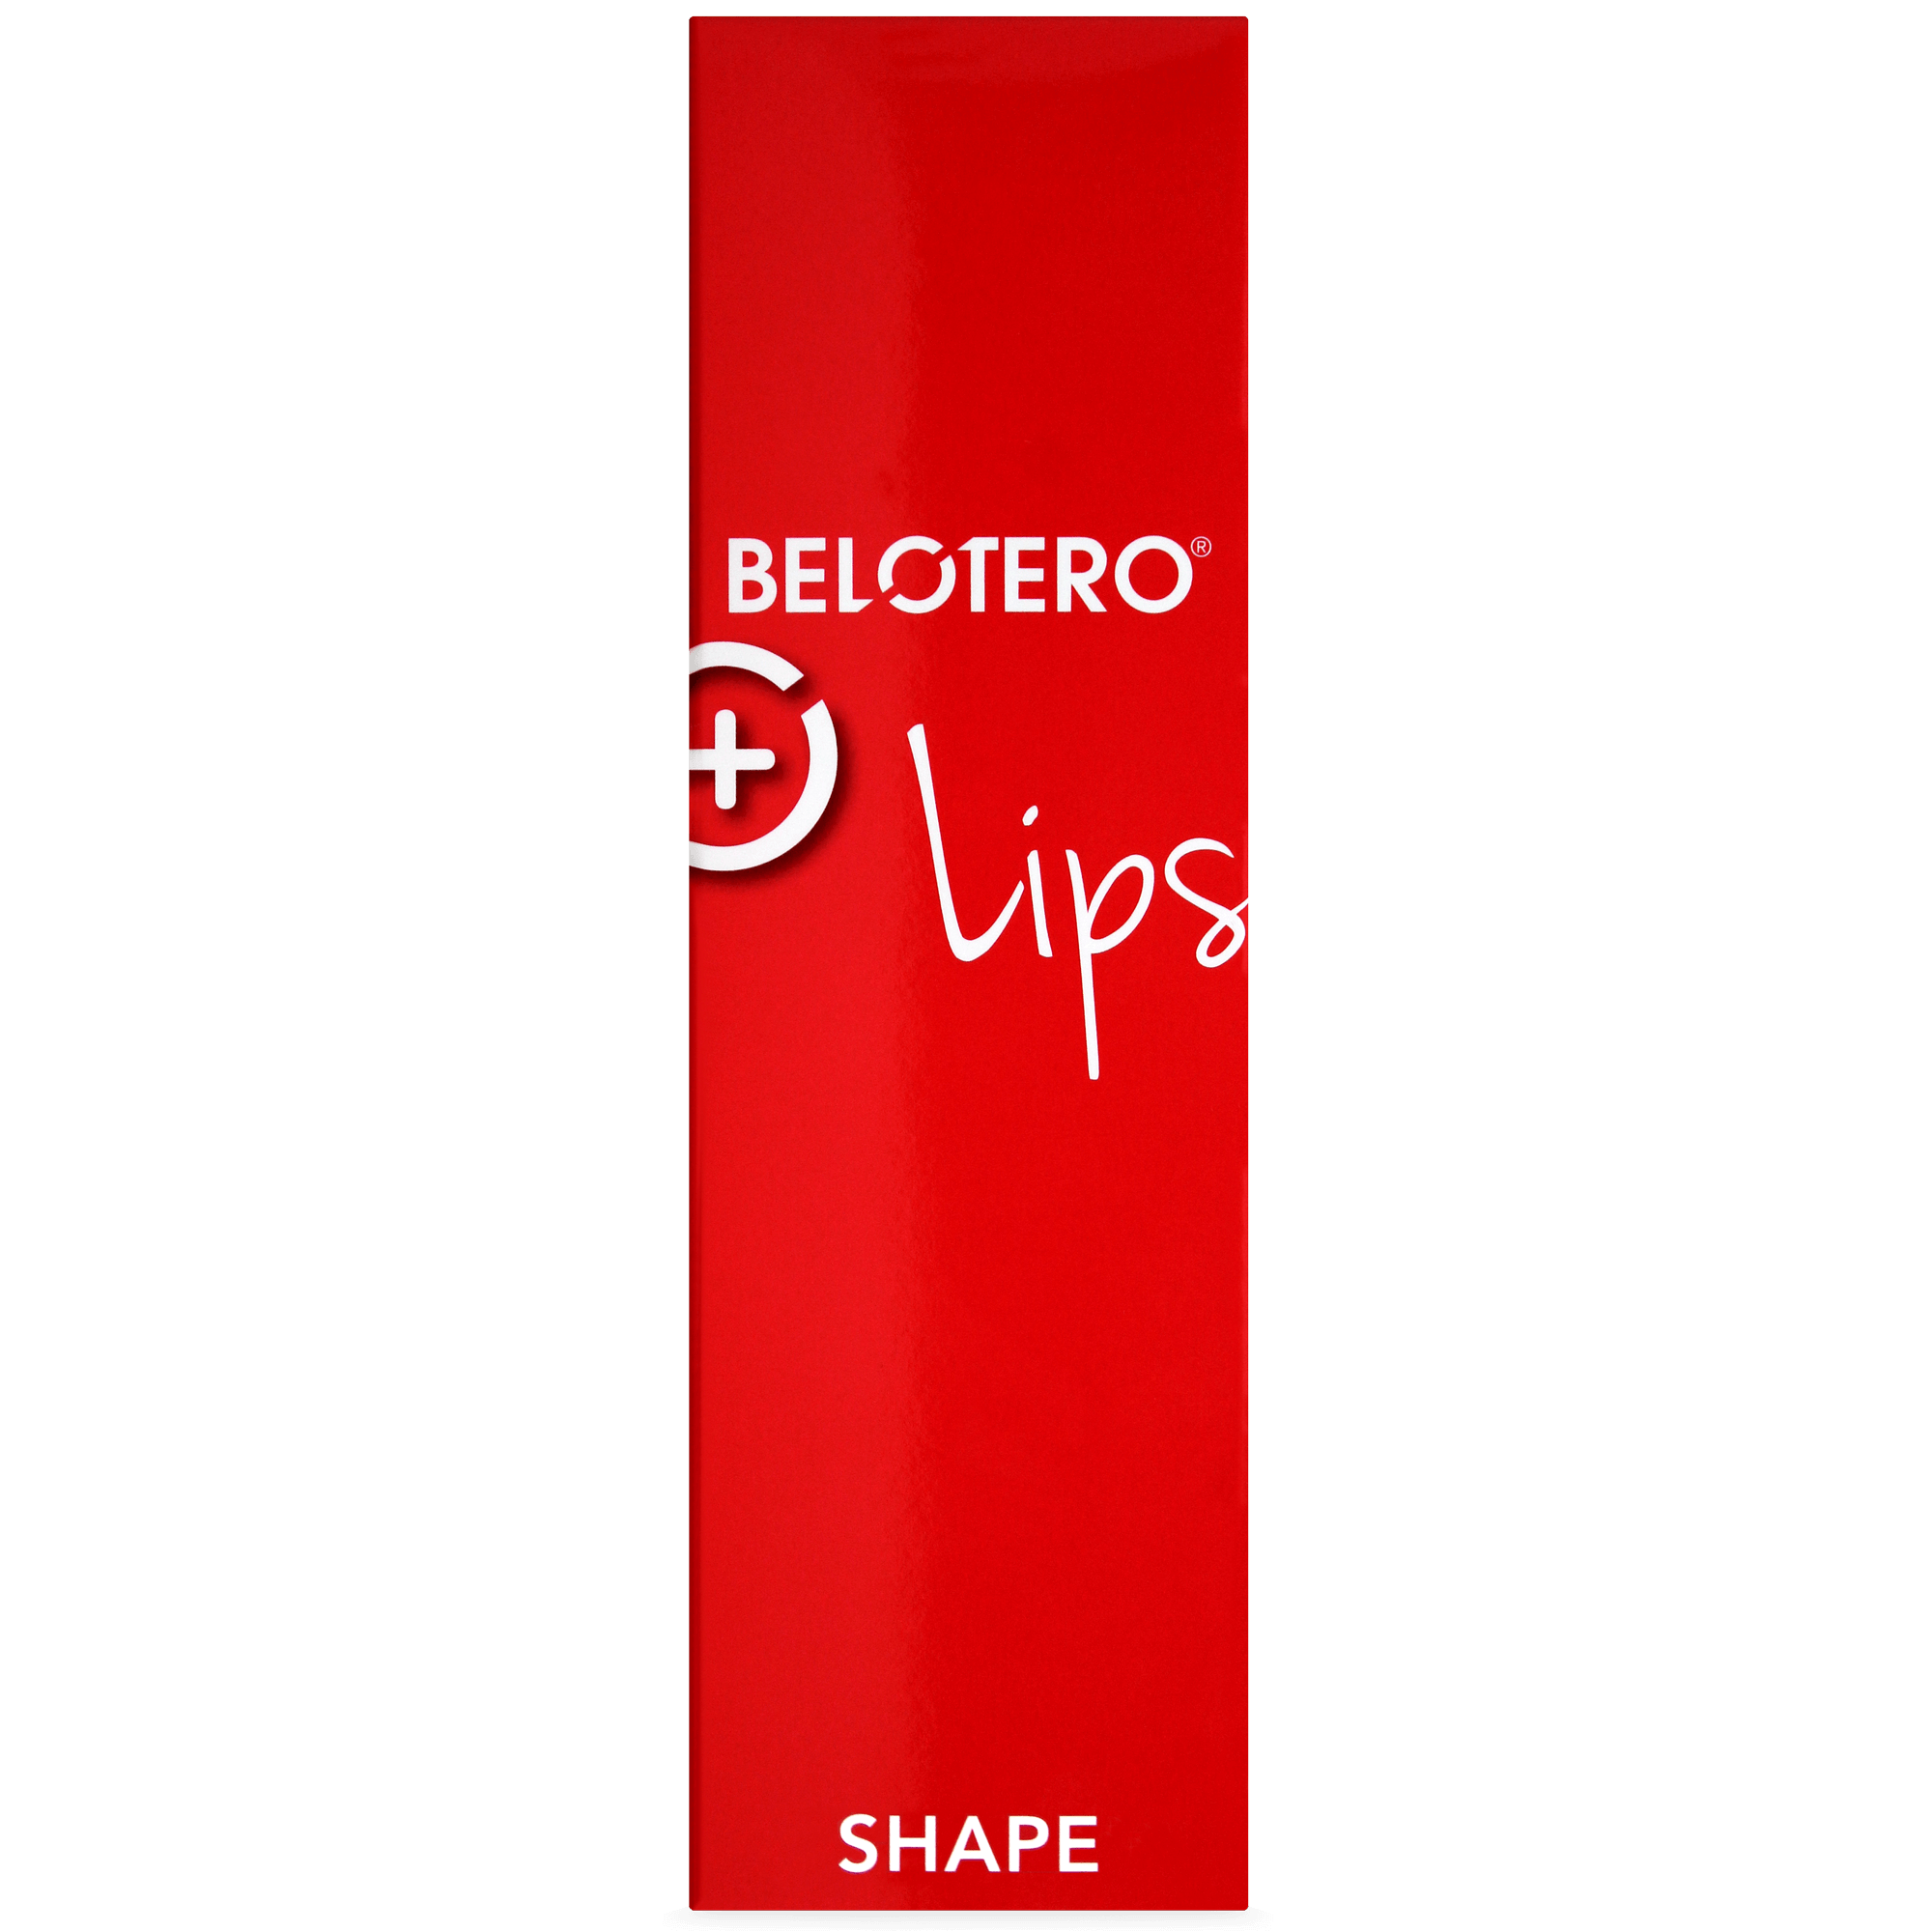 Belotero Lips Contour 0.6 мл. Белотеро Липс Шейп 0.6. Belotero Lips Shape, 0,6 мл. Белотеро Липс контур.